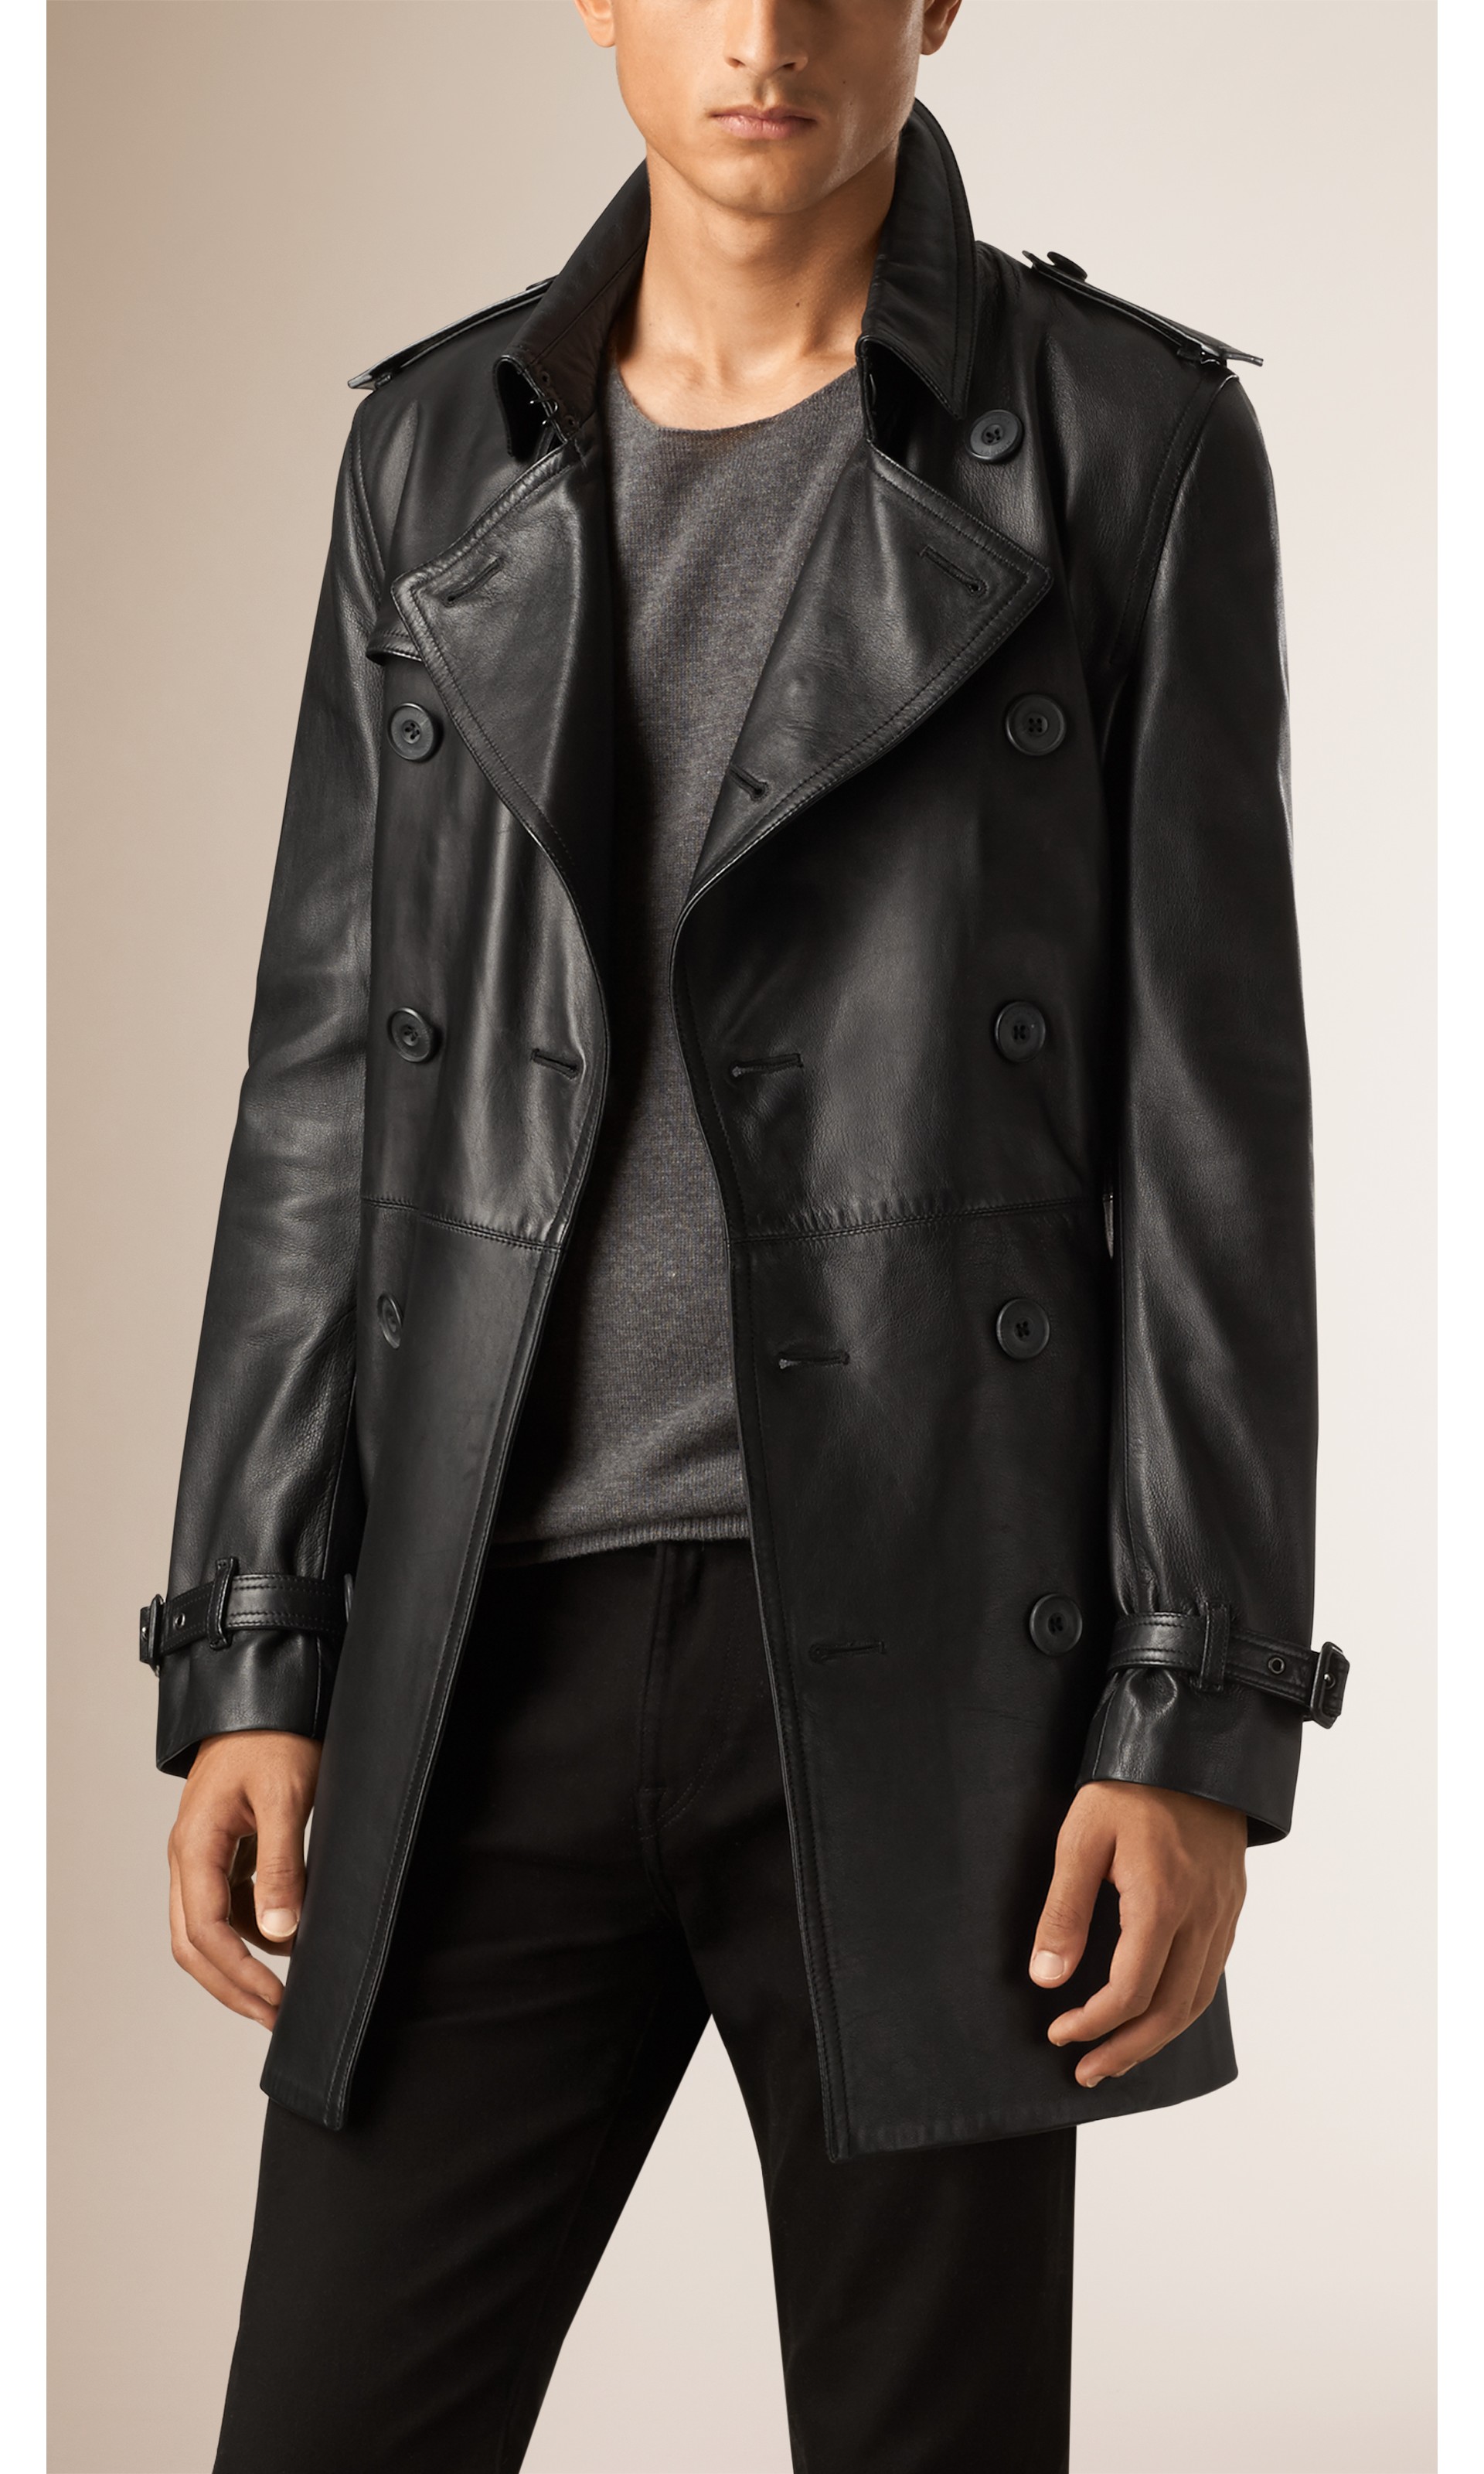 Nappa Leather Trench Coat in Black - Men | Burberry United Kingdom